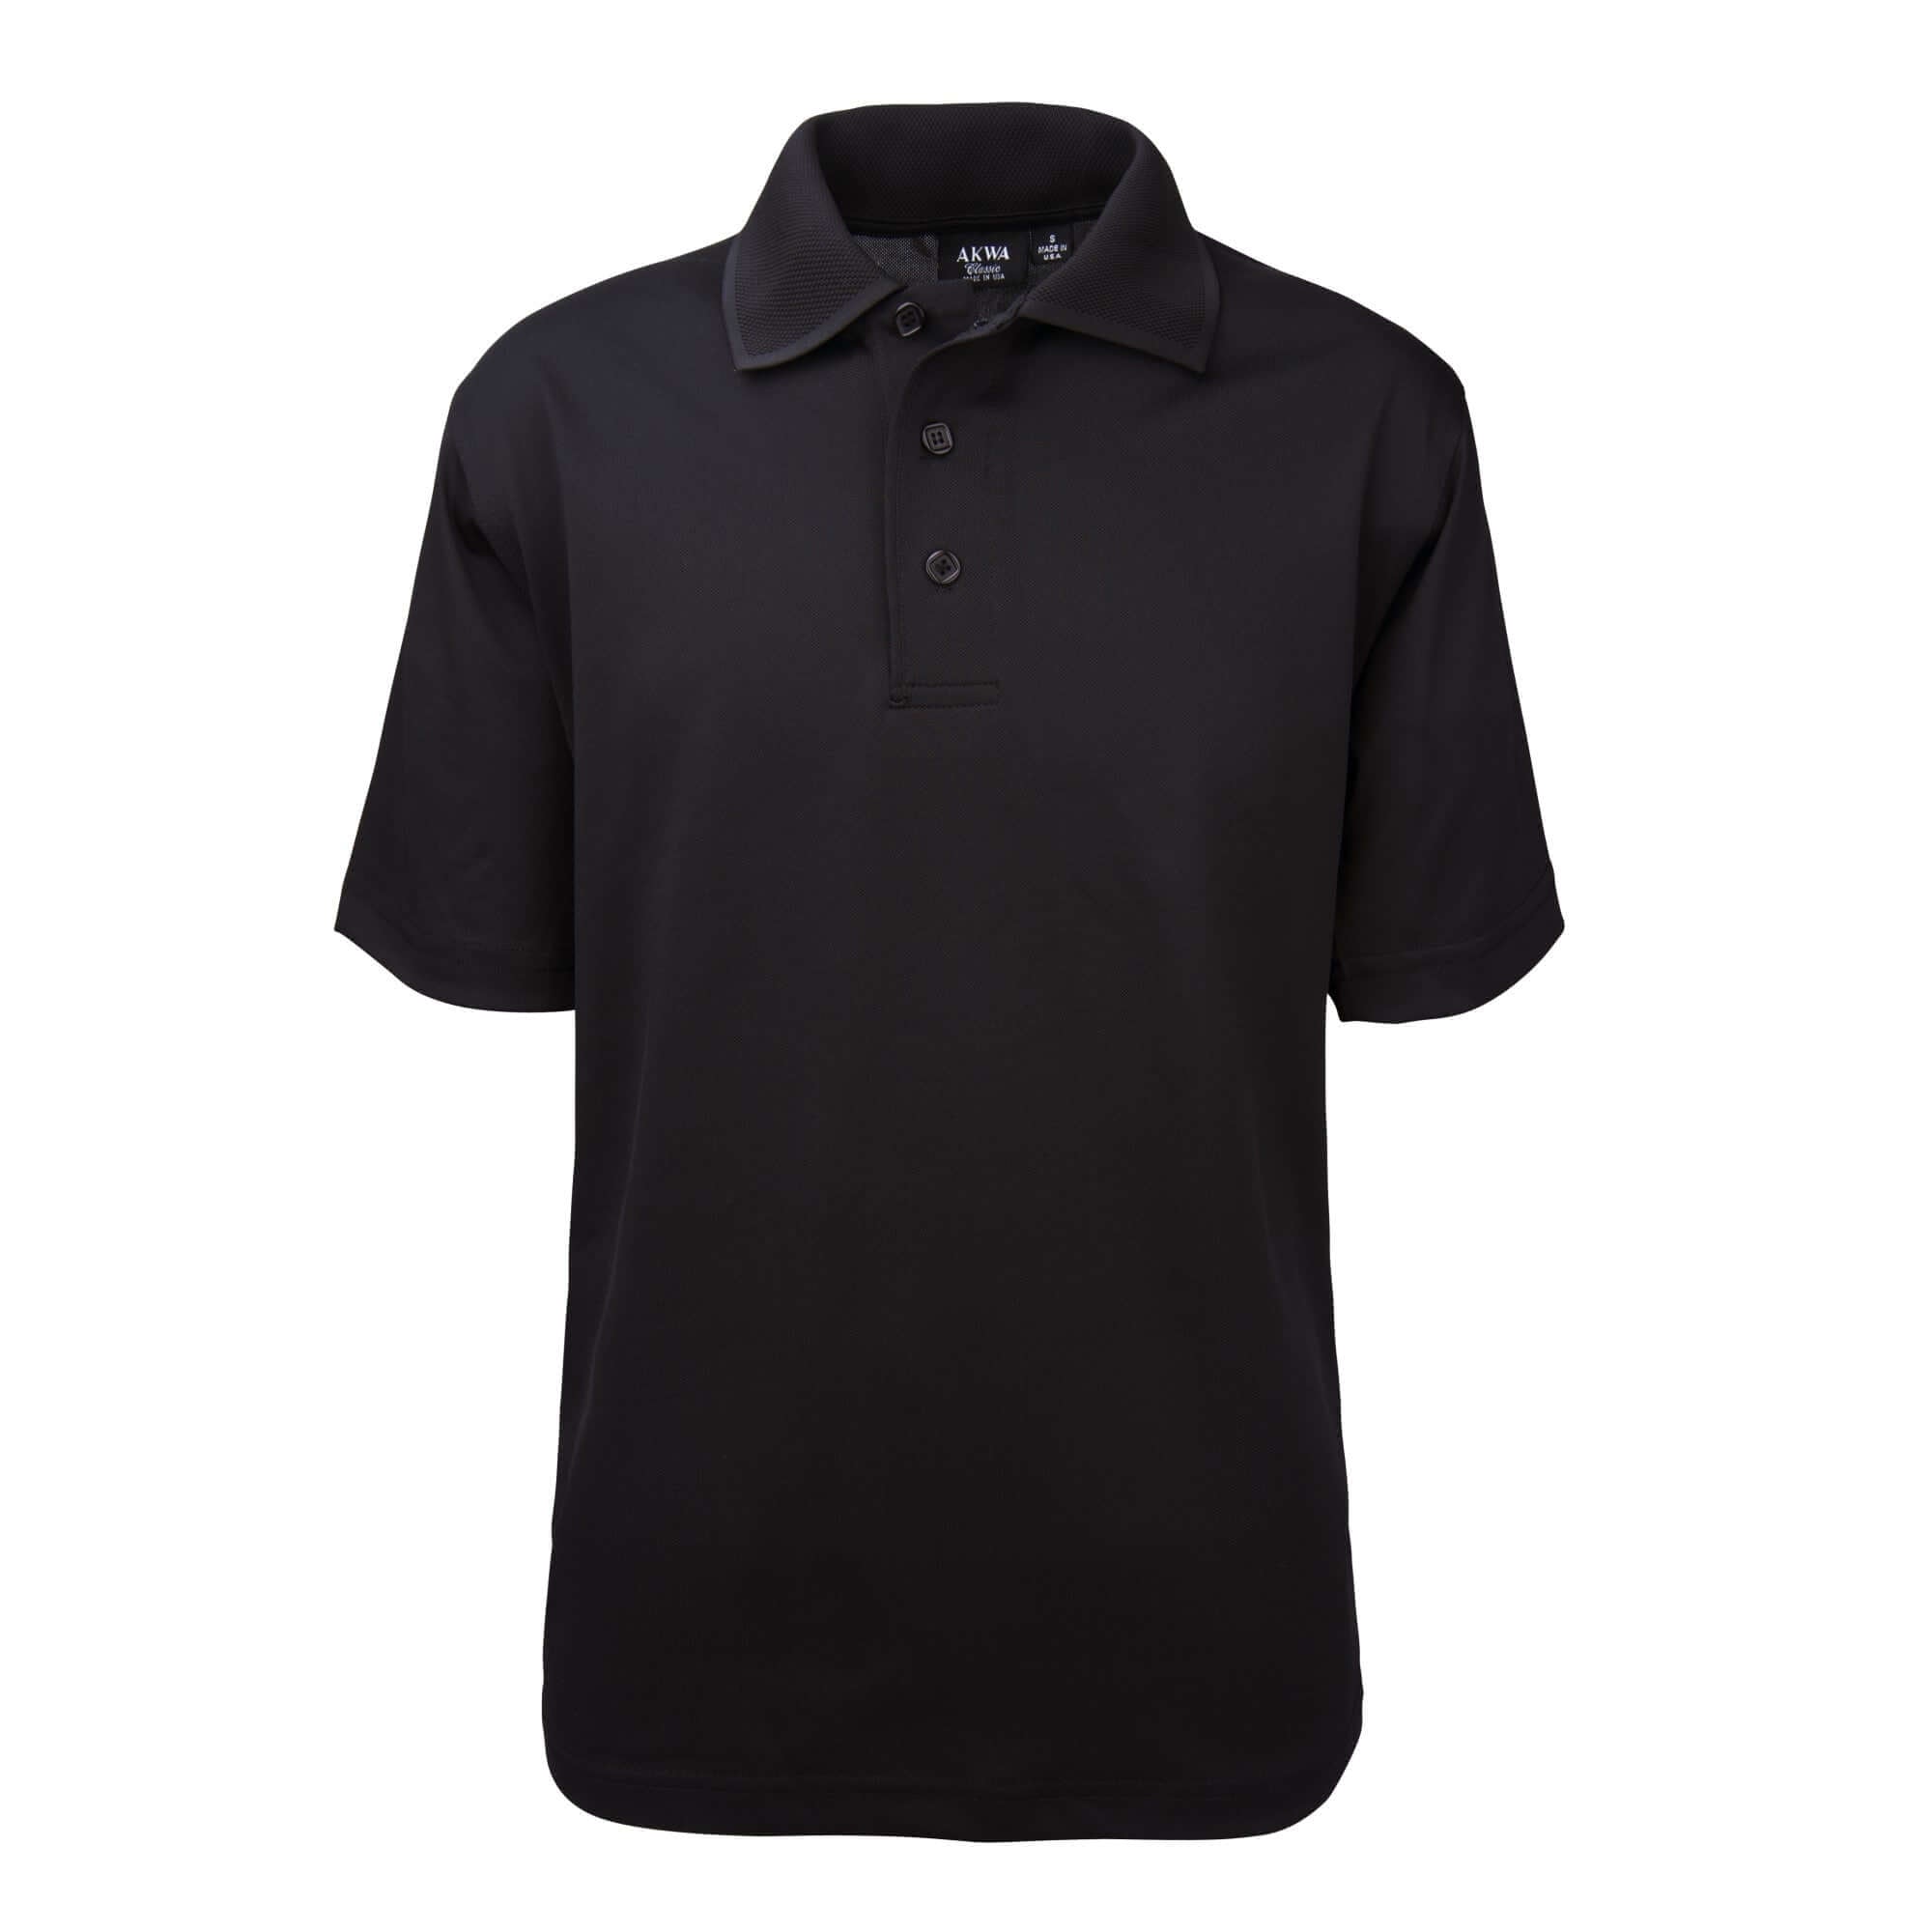 Men's Made in USA Tech Polo Shirt color_black - the flag shirt